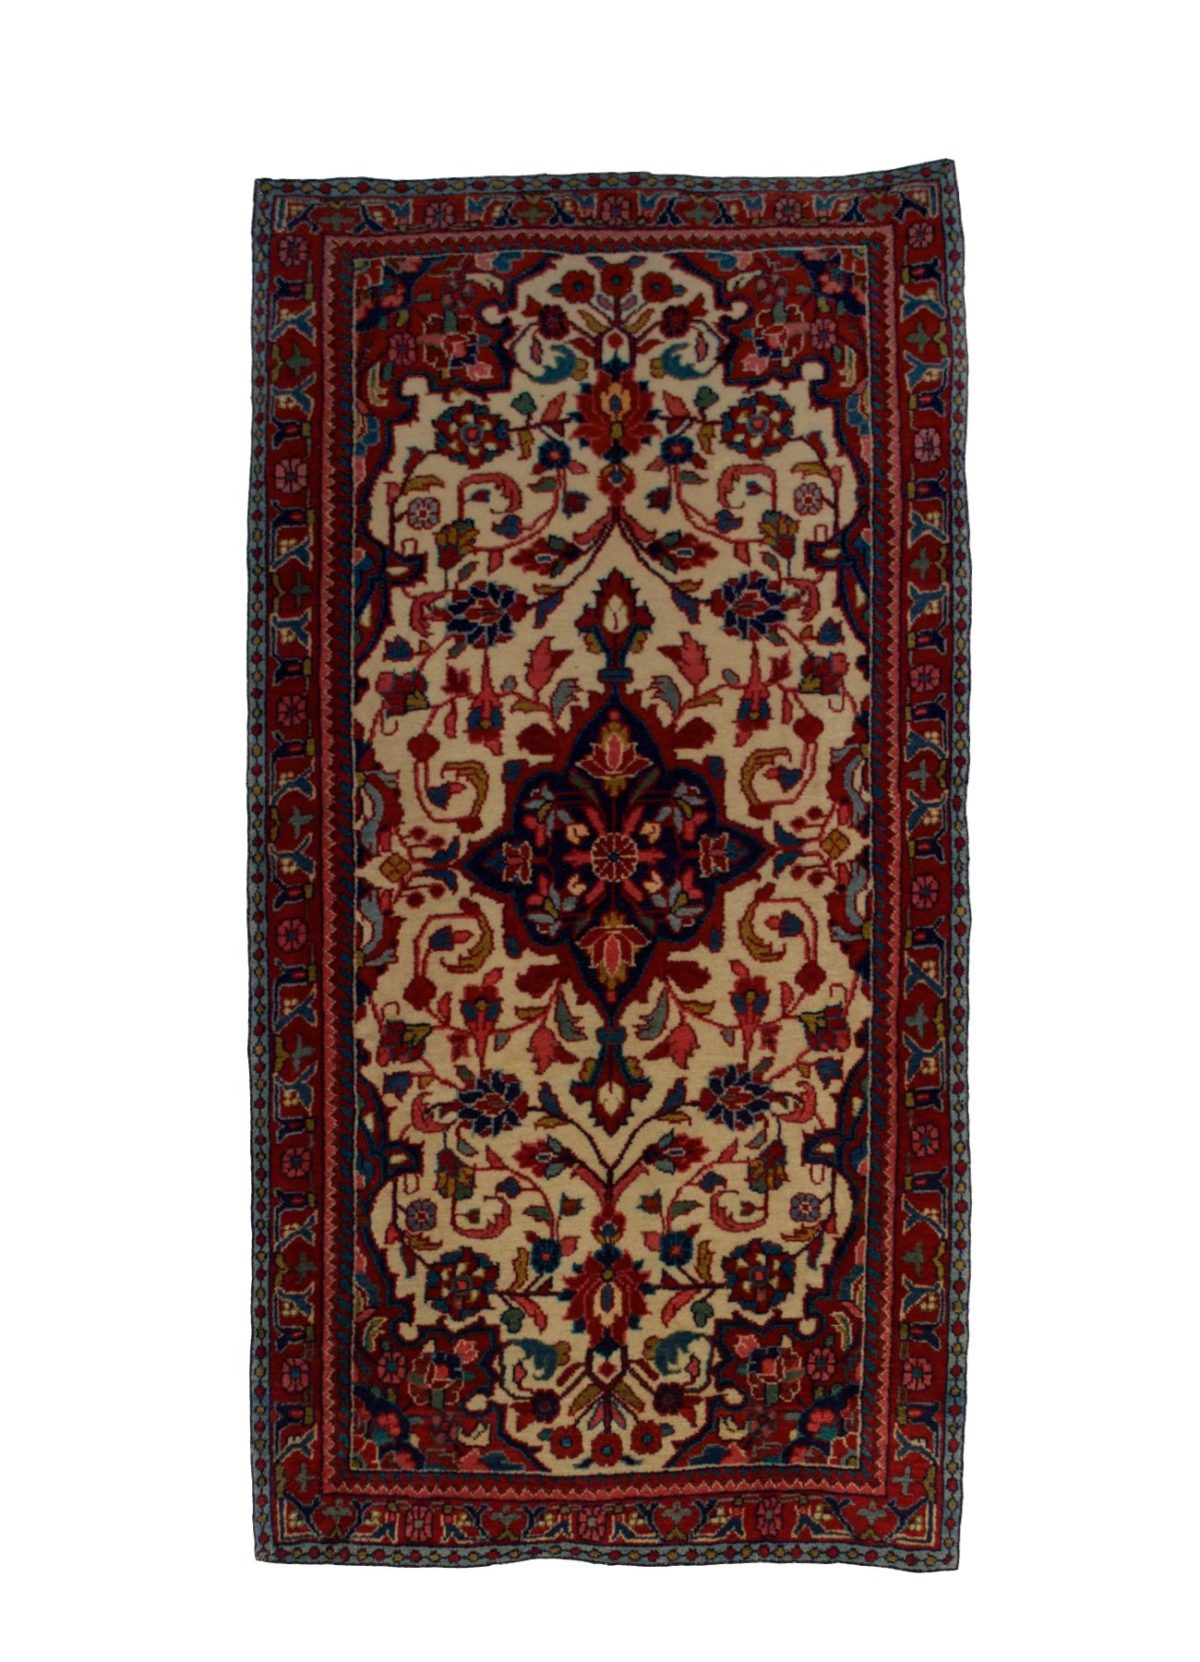 Persian Sarouk 2' x 4' Handmade Area Rug - Shabahang Royal Carpet